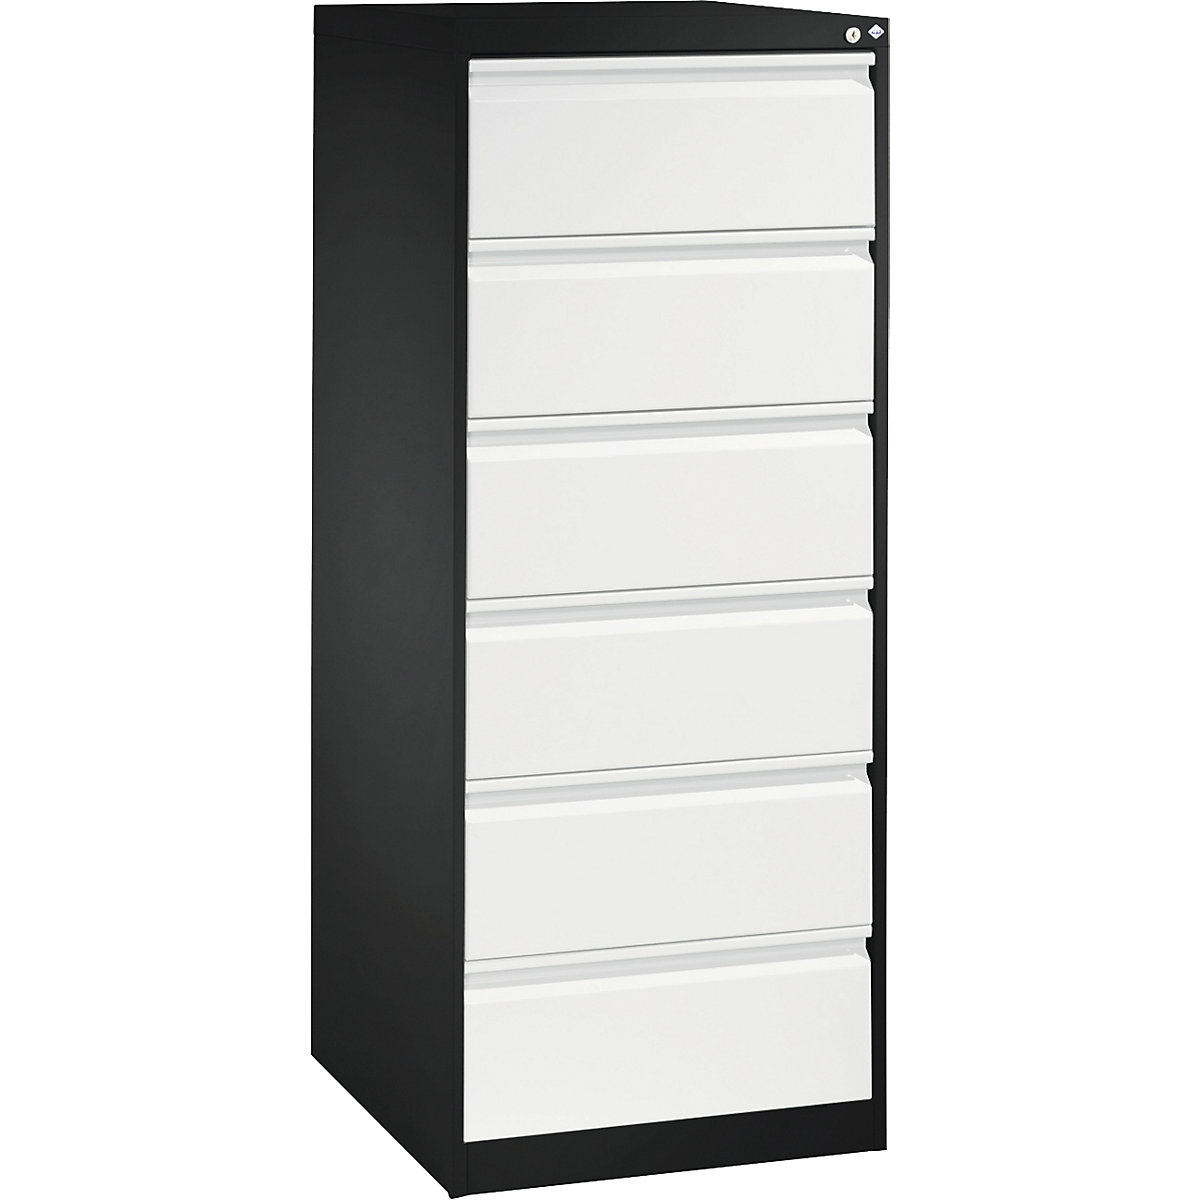 C+P – ACURADO index card cabinet, 2 track, 6 drawers, black grey / traffic white